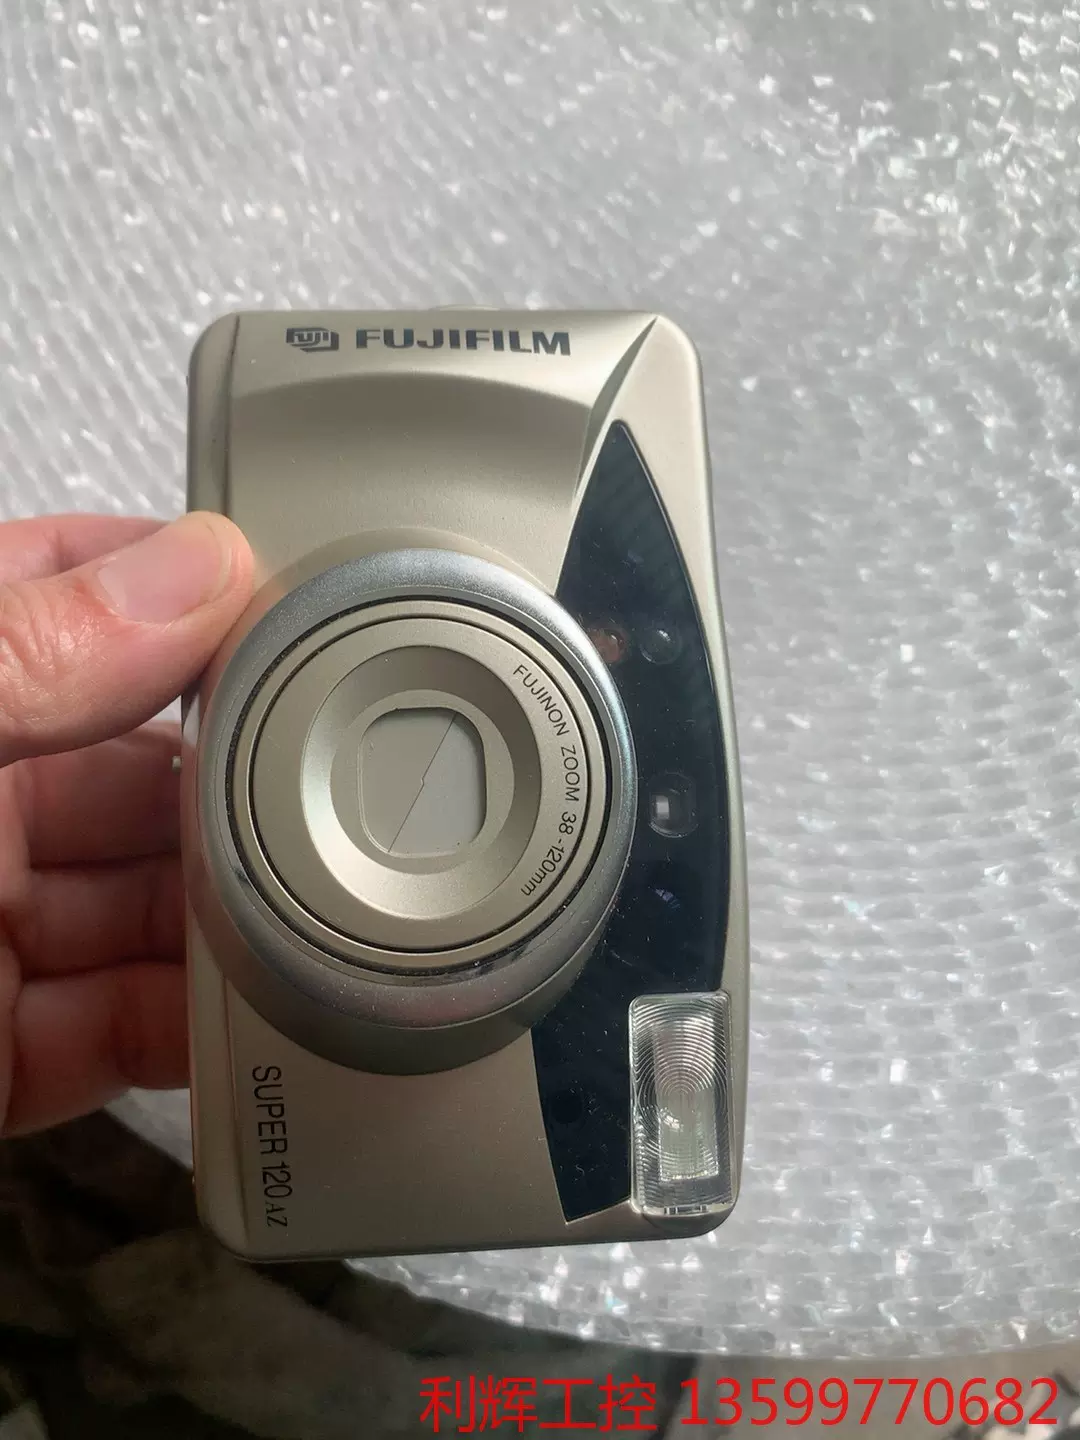 FUJIFILM super 120 az - フィルムカメラ